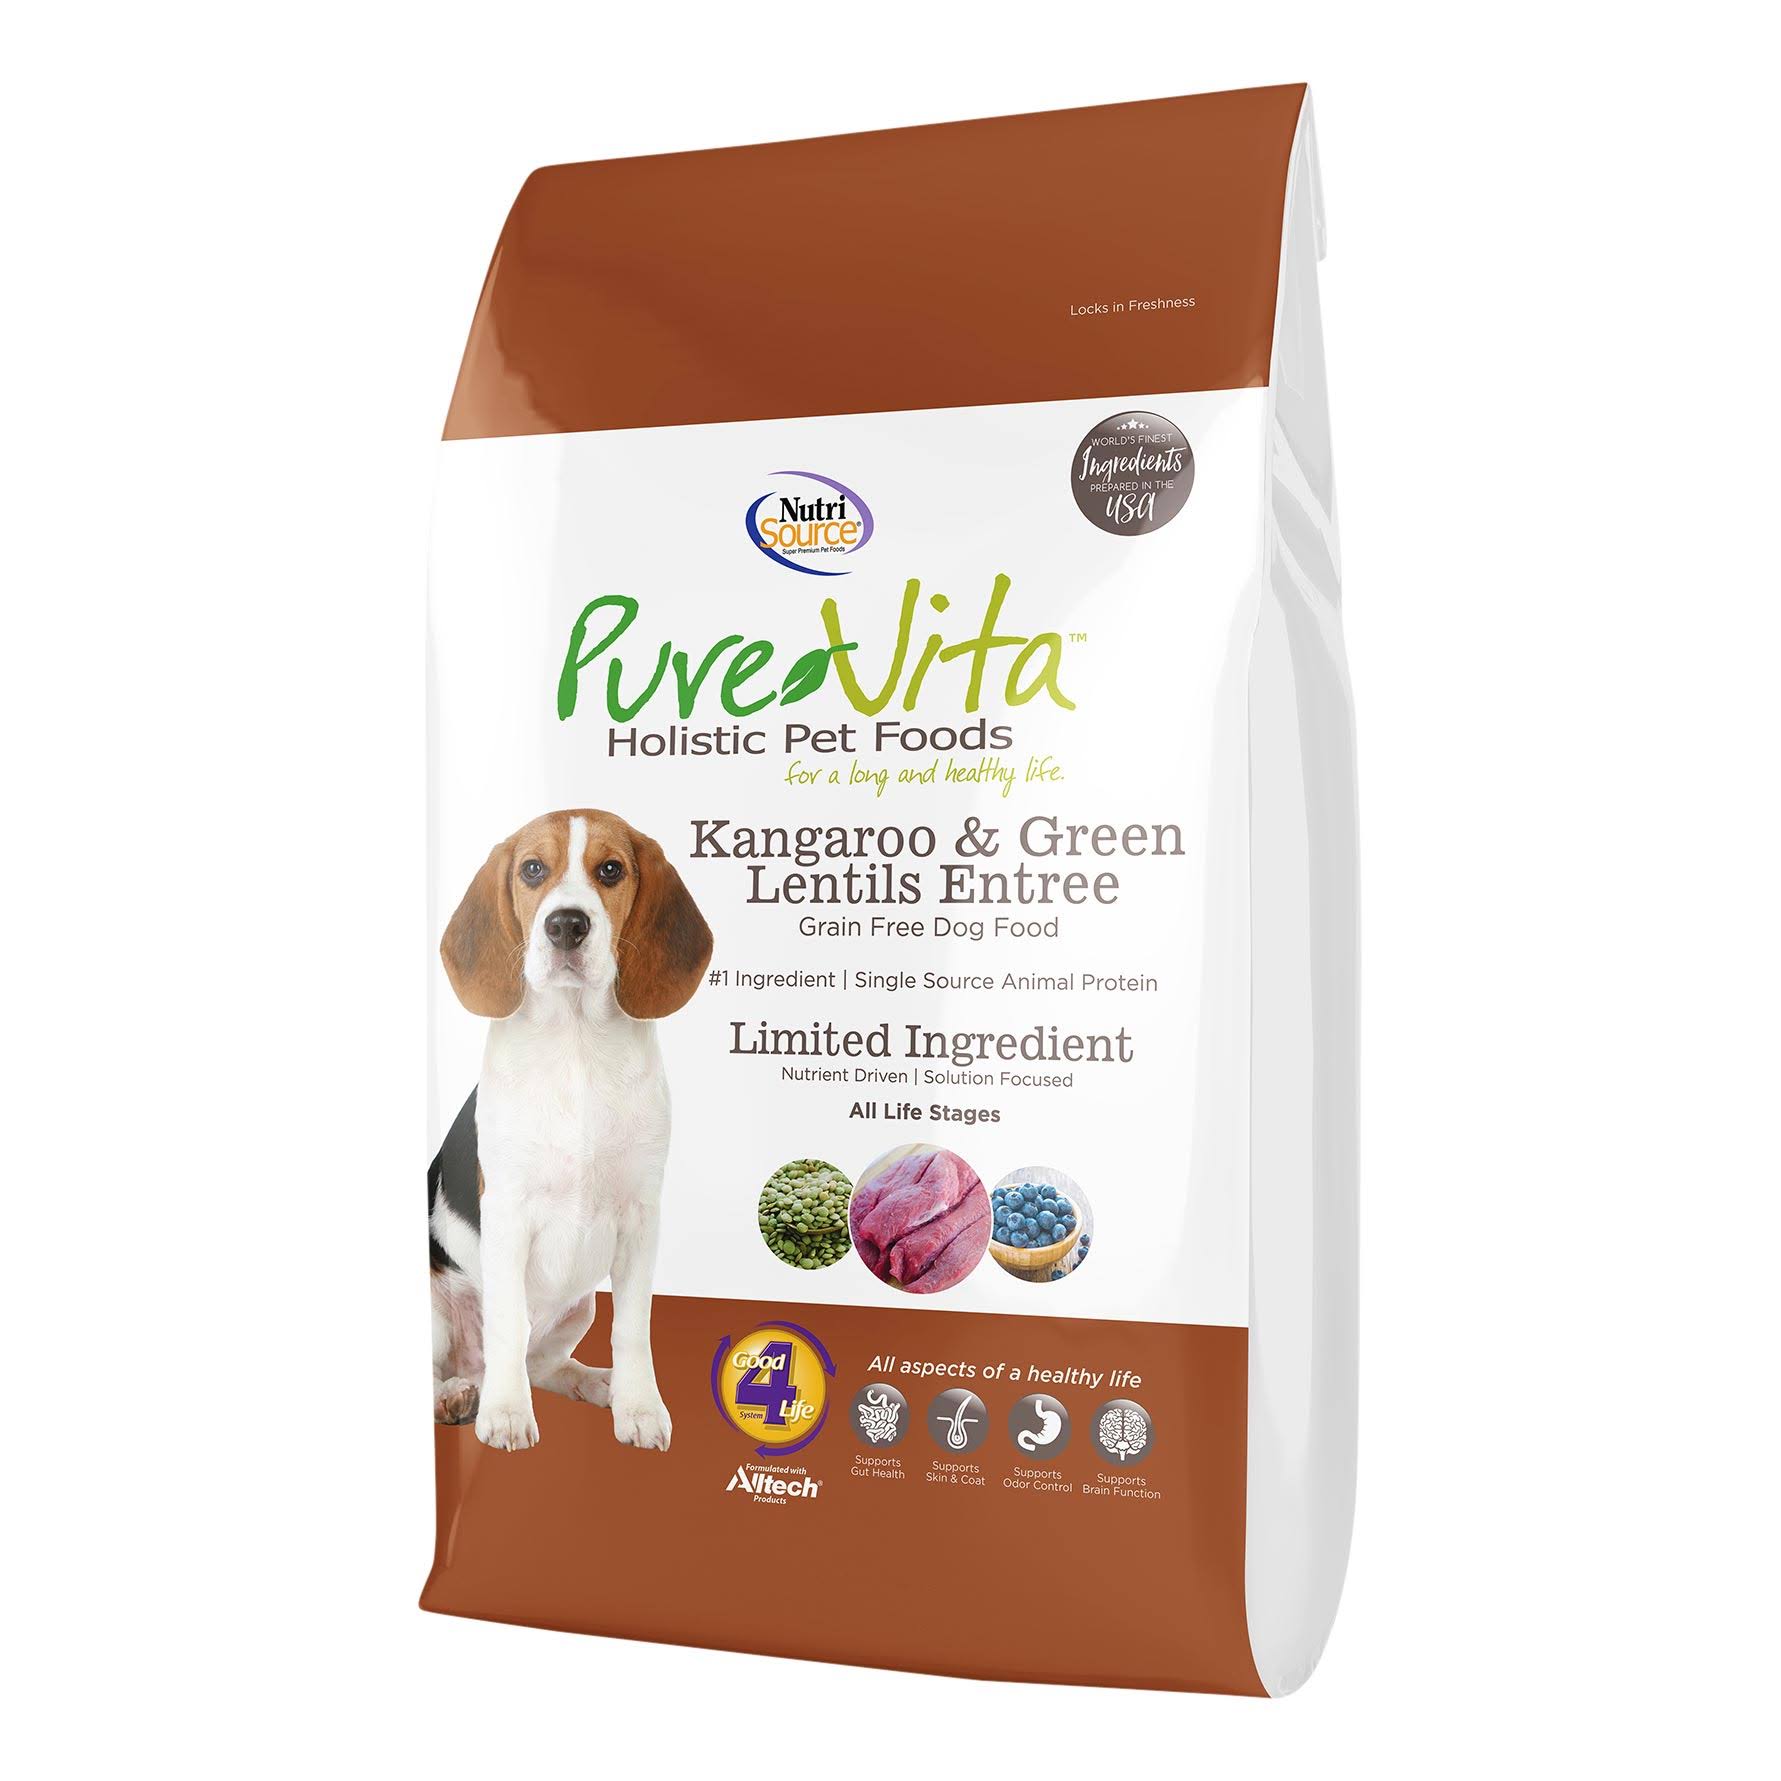 PureVita Kangaroo & Green Lentils Grain-Free Dog Food, 25 lb